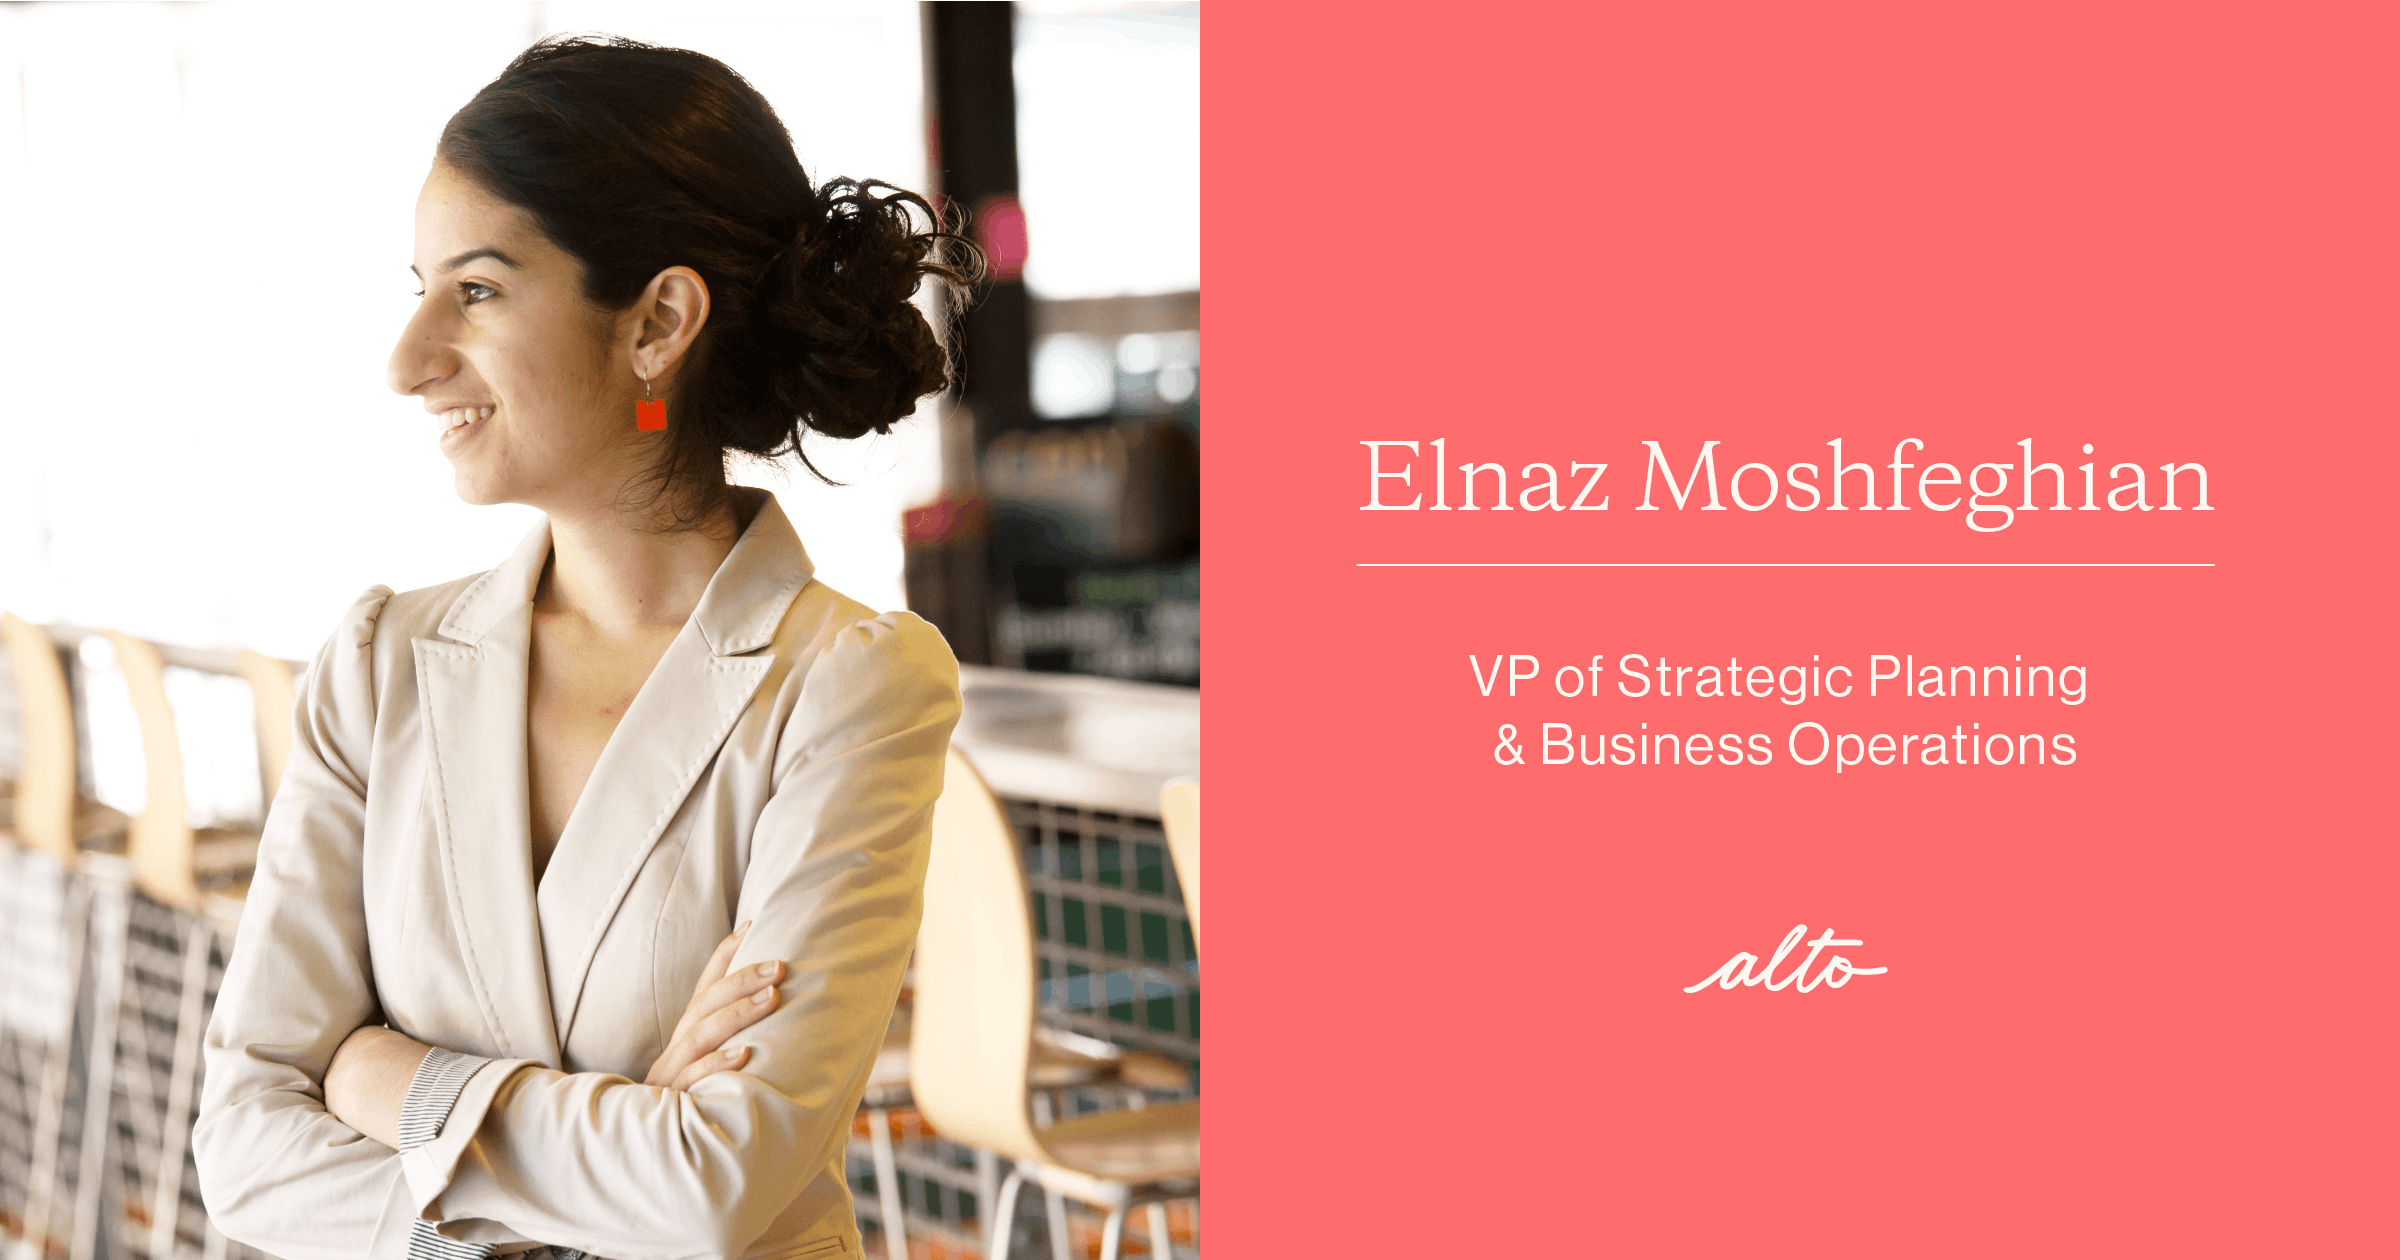 Meet Elnaz Moshfeghian, our newest VP of Strategic Planning & Business Operations - Photo